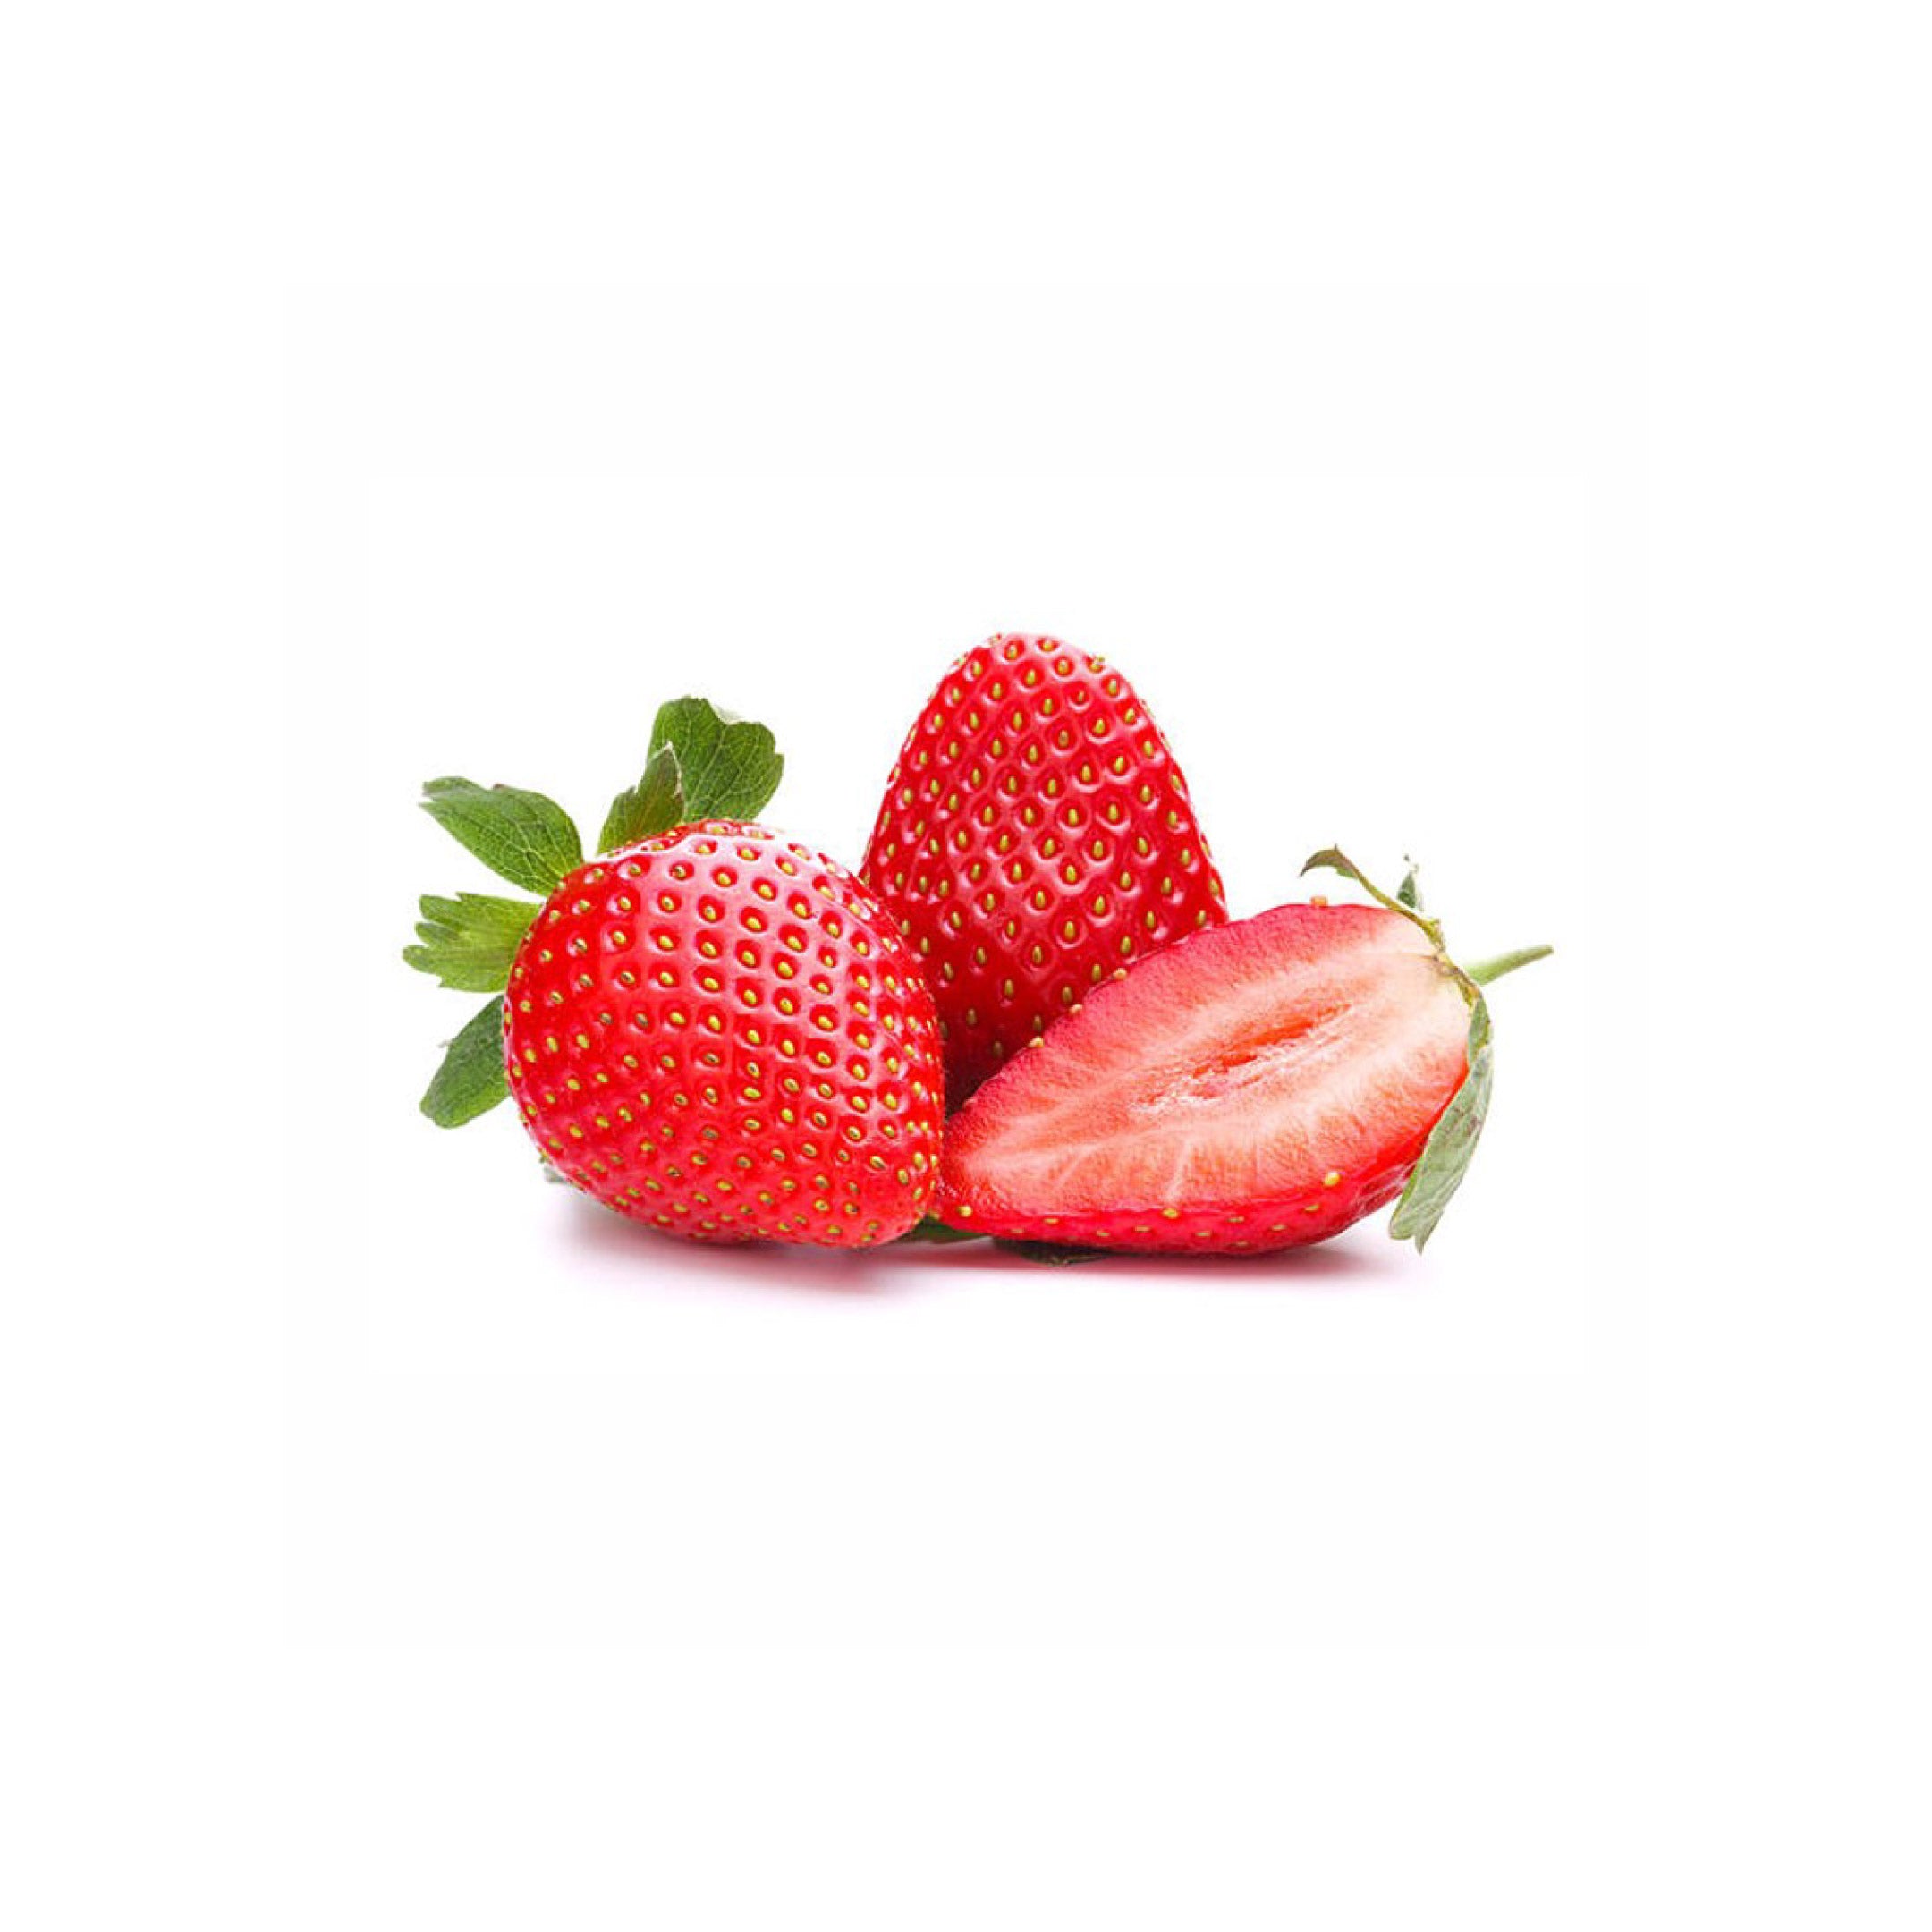 Strawberry (Imported) - 500g - Farm Fresh | Online Store Sri Lanka